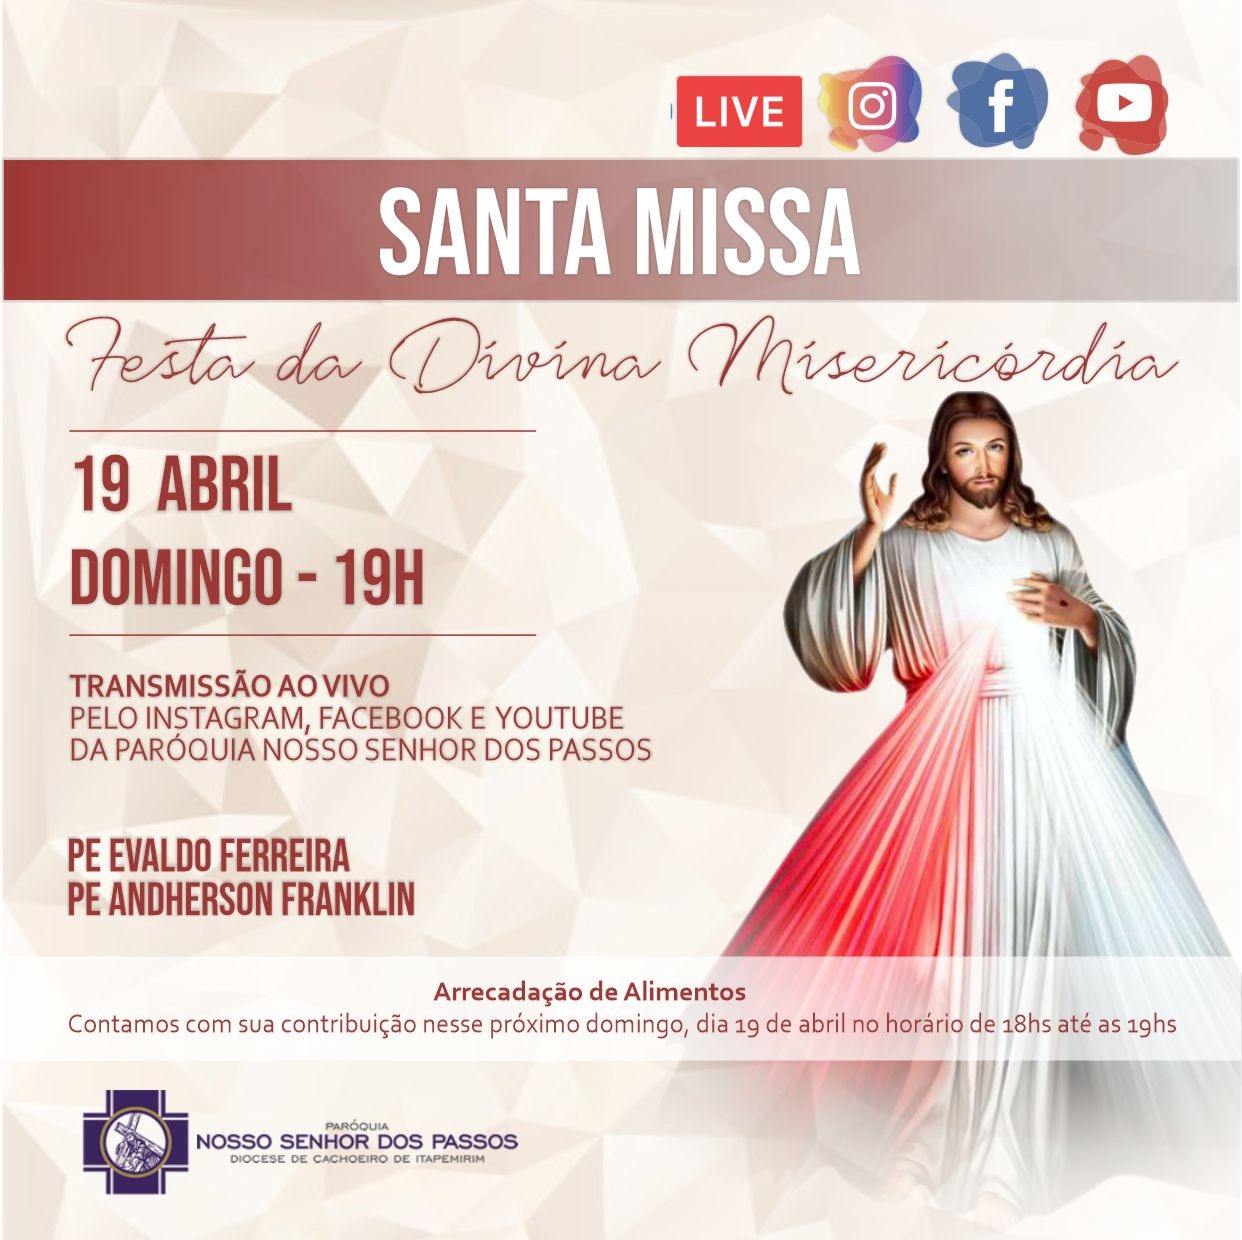 Santa Missa - Festa da Divina Misericórdia - 19 de abril 